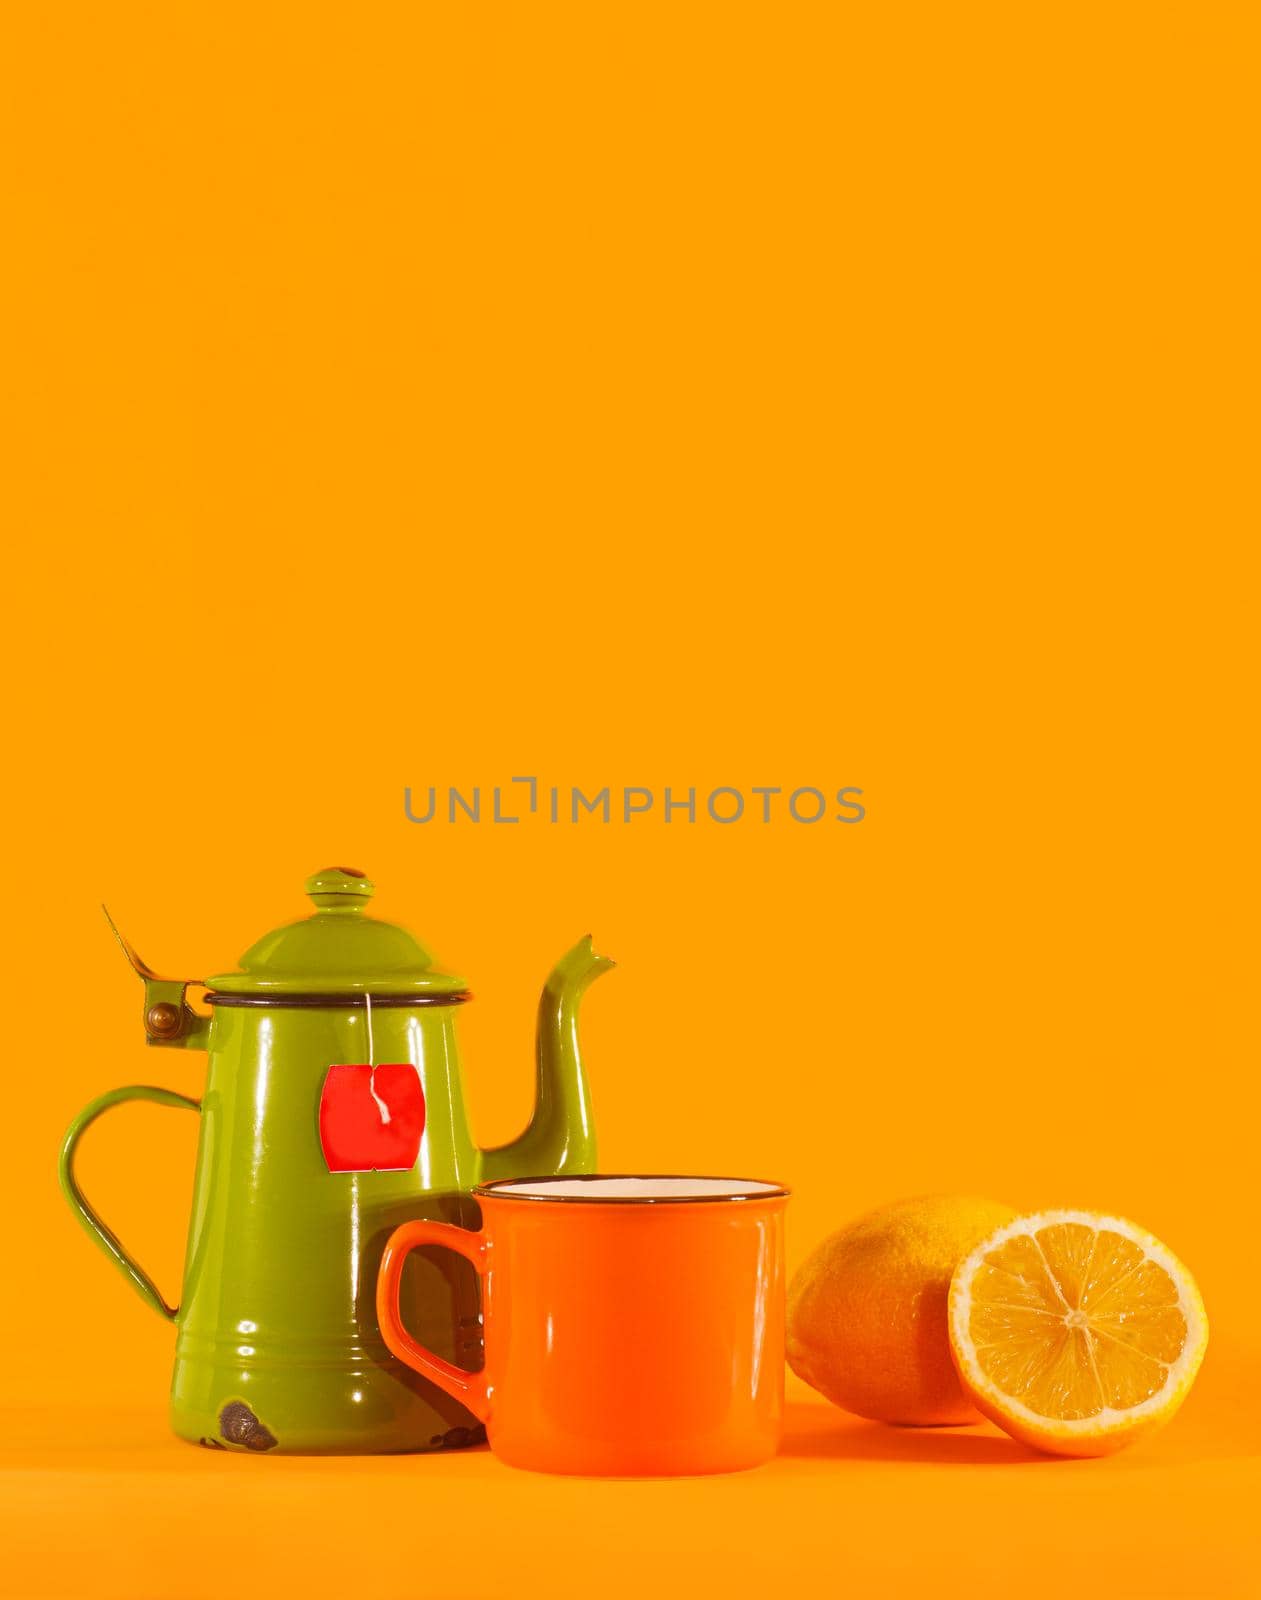 Set of vintage teacup, orange cup and lemon on orange background. Copy space on top